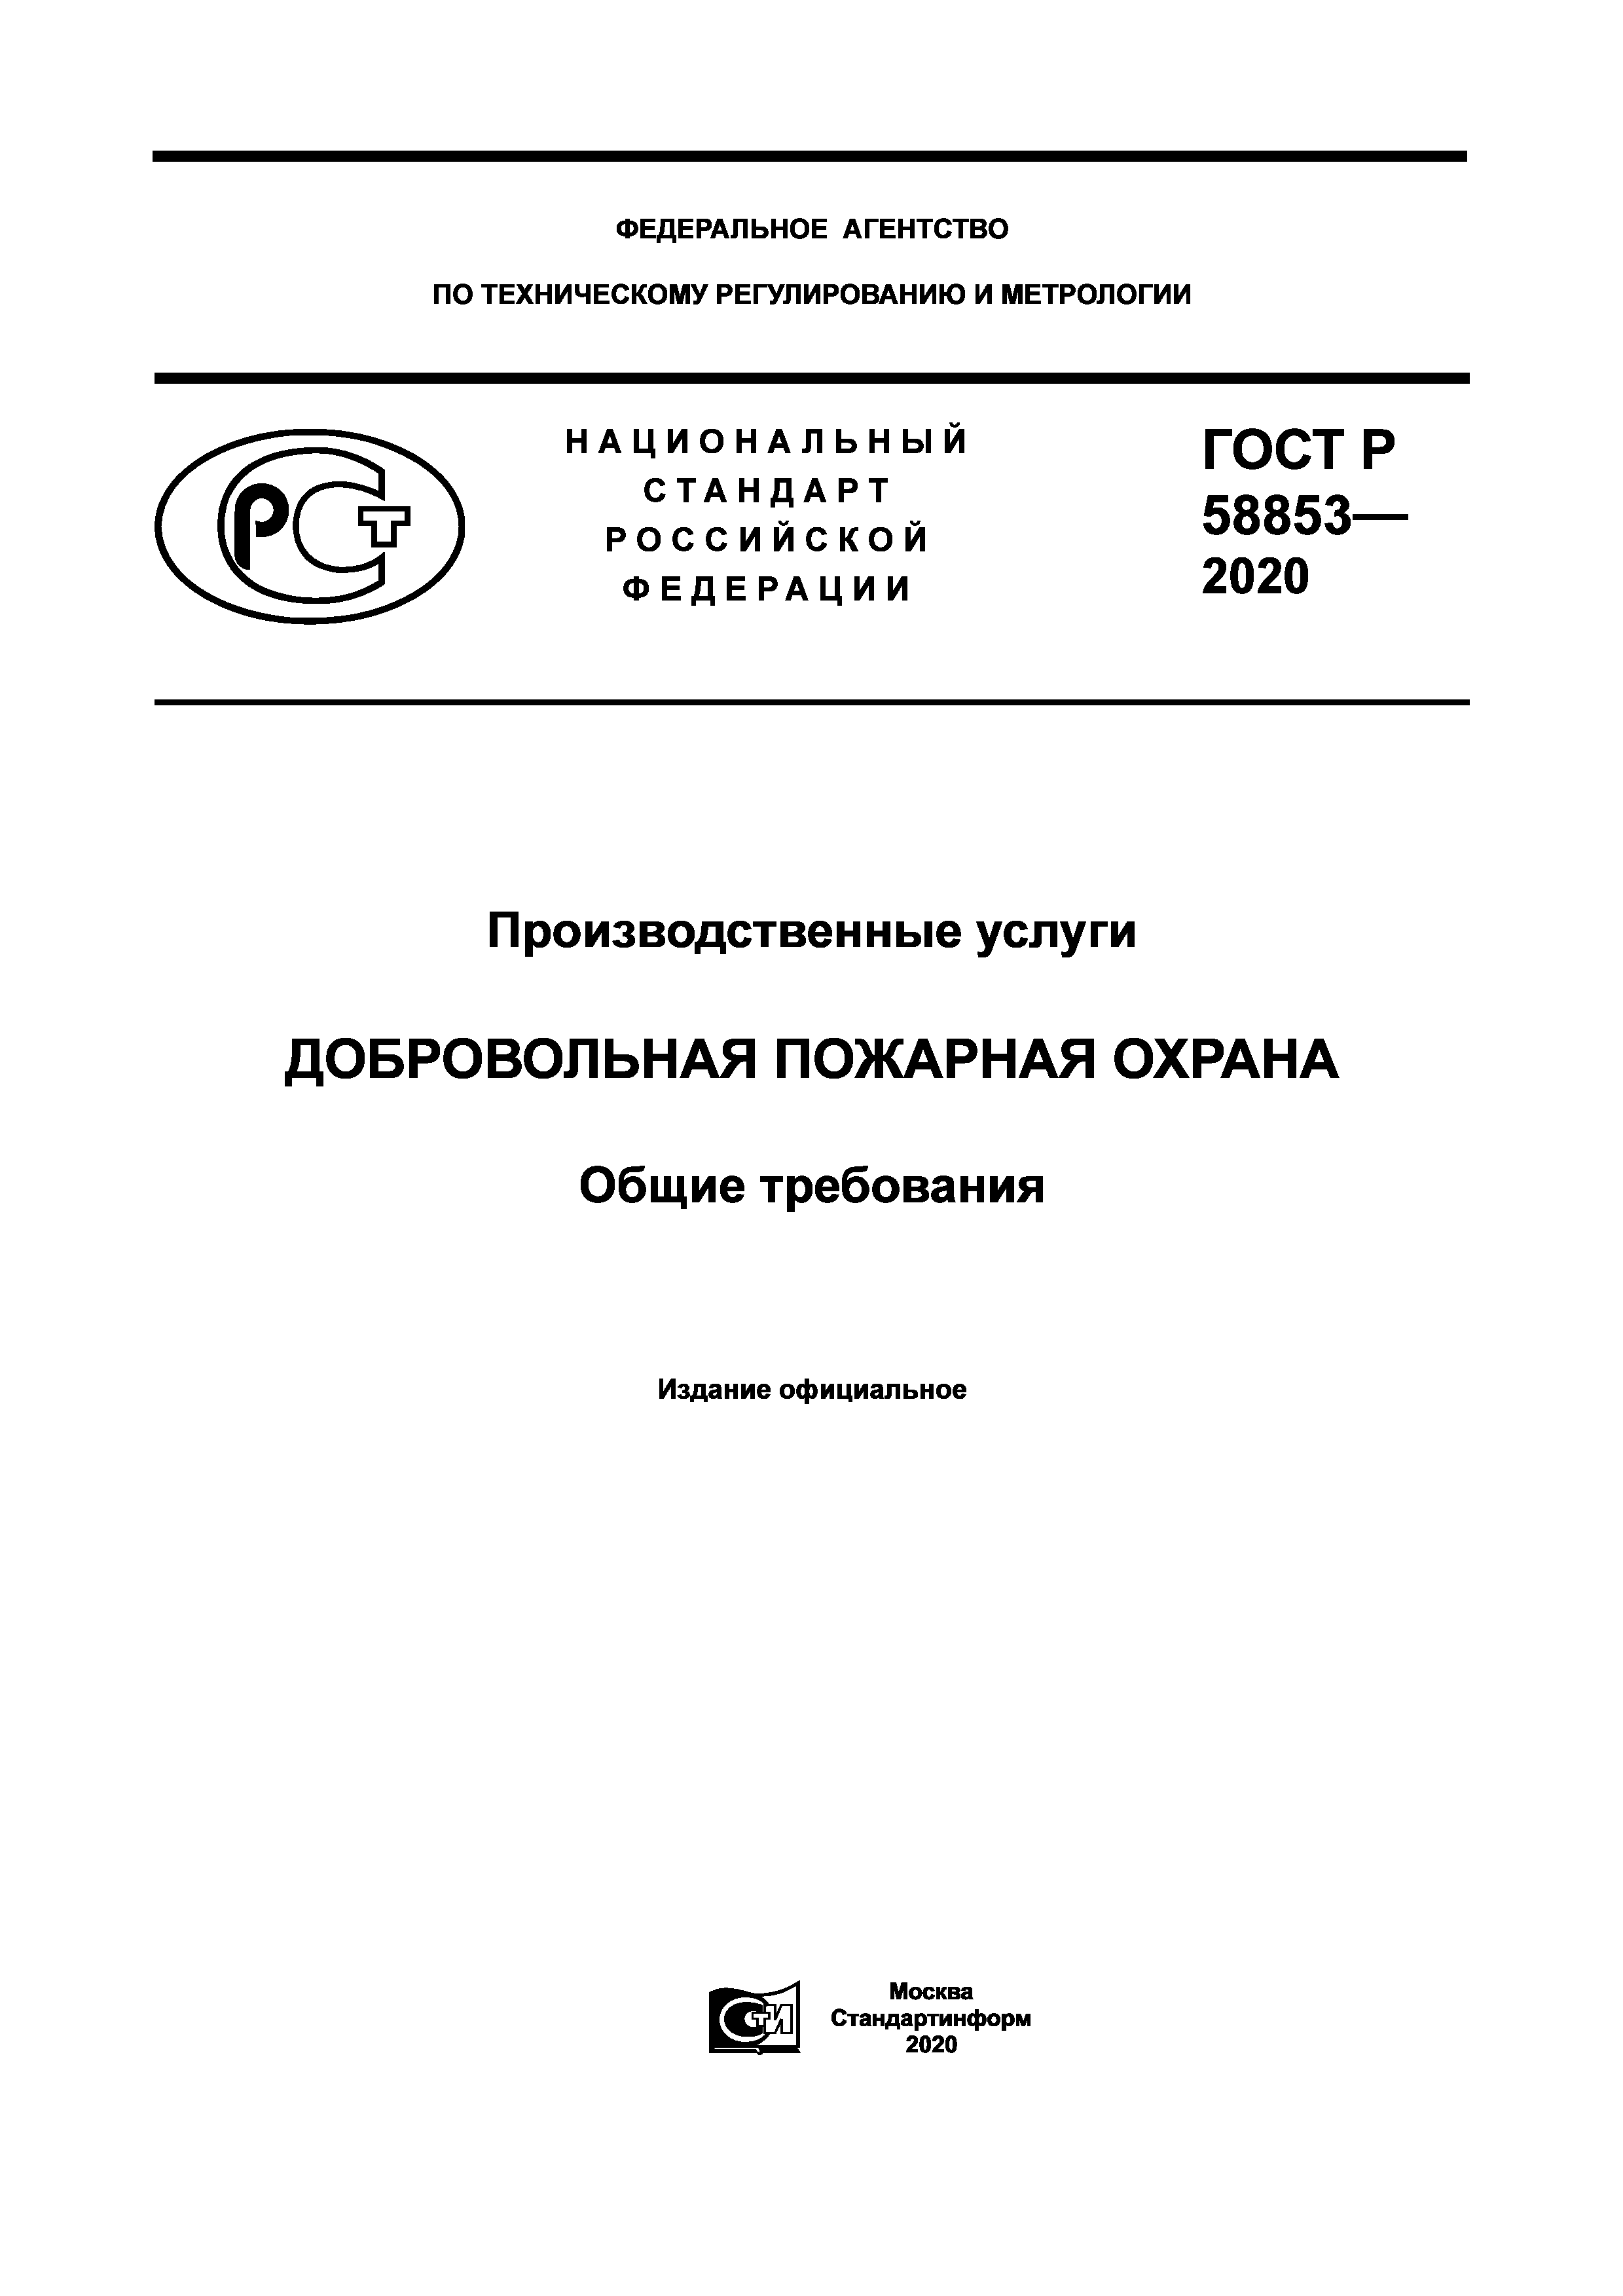 ГОСТ Р 58853-2020